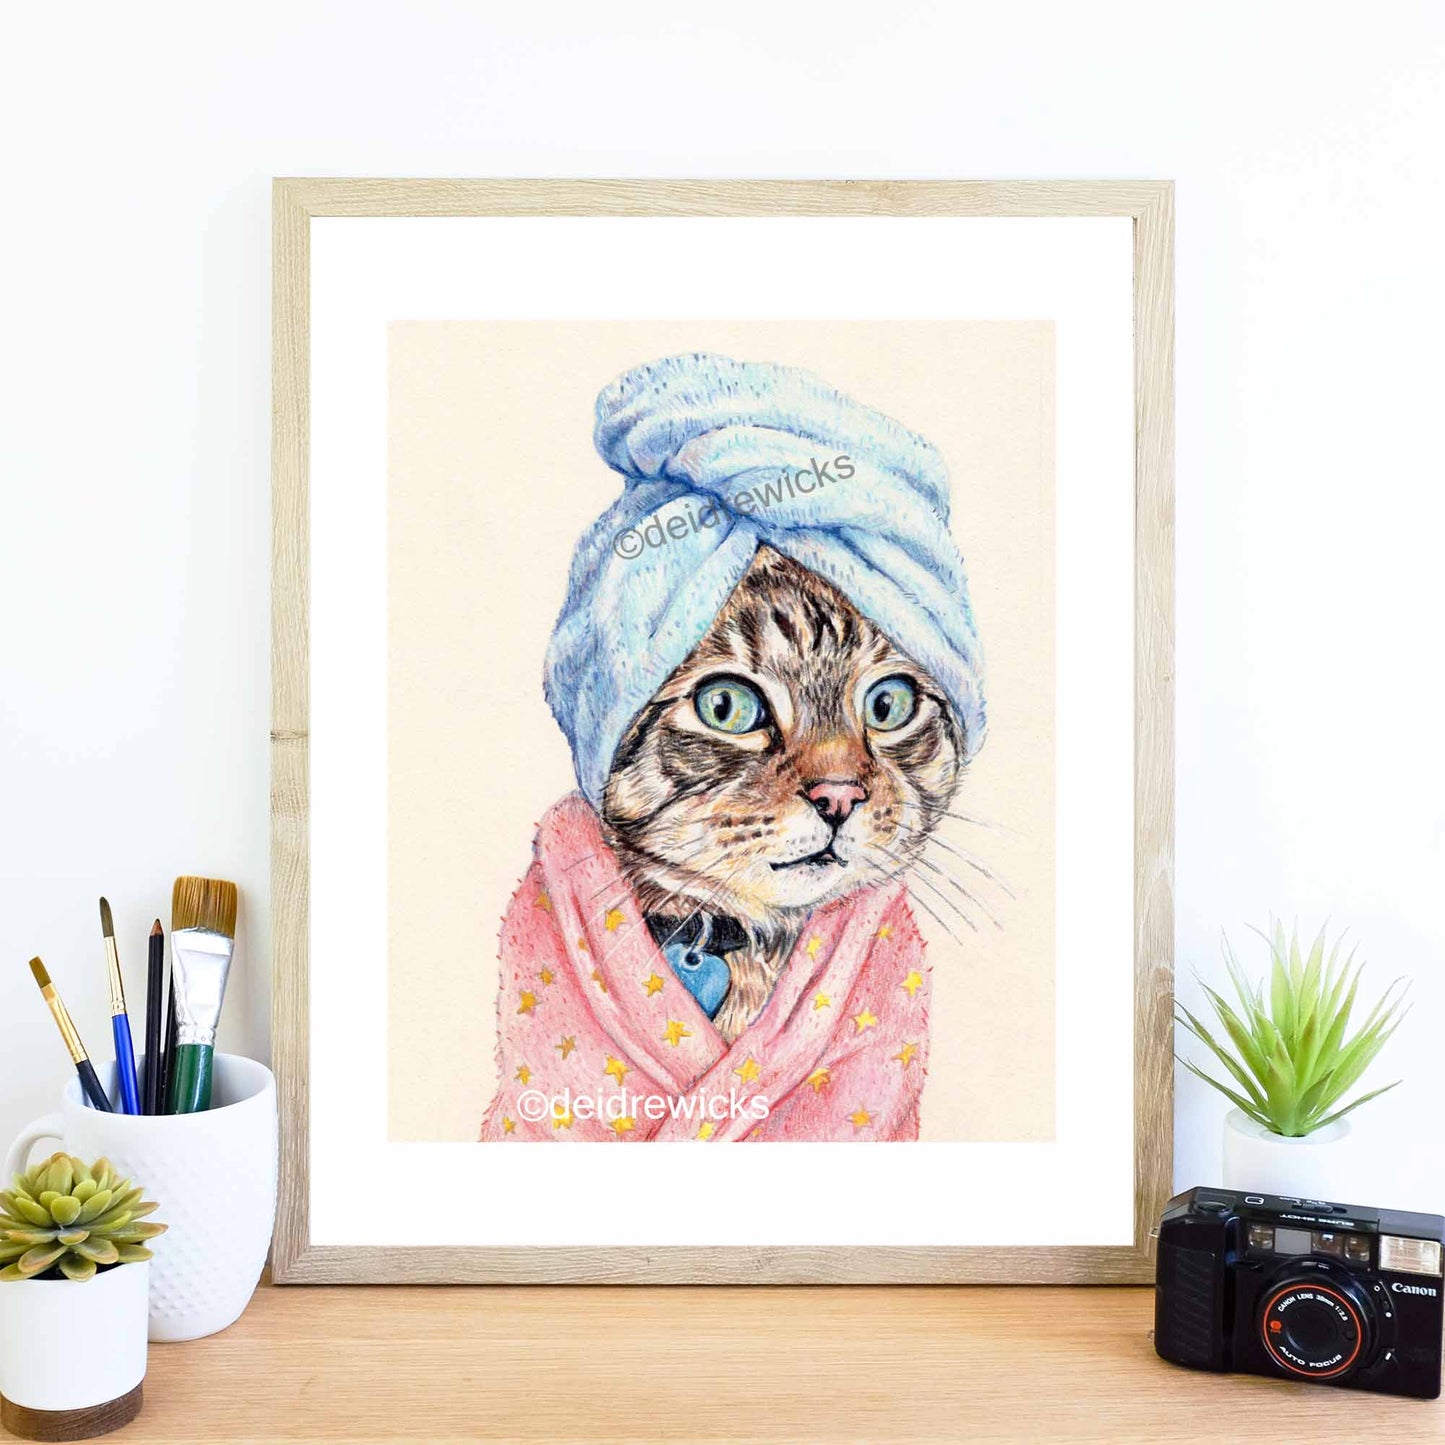 Suggested framing for a tabby cat bathroom art print by Deidre Wicks